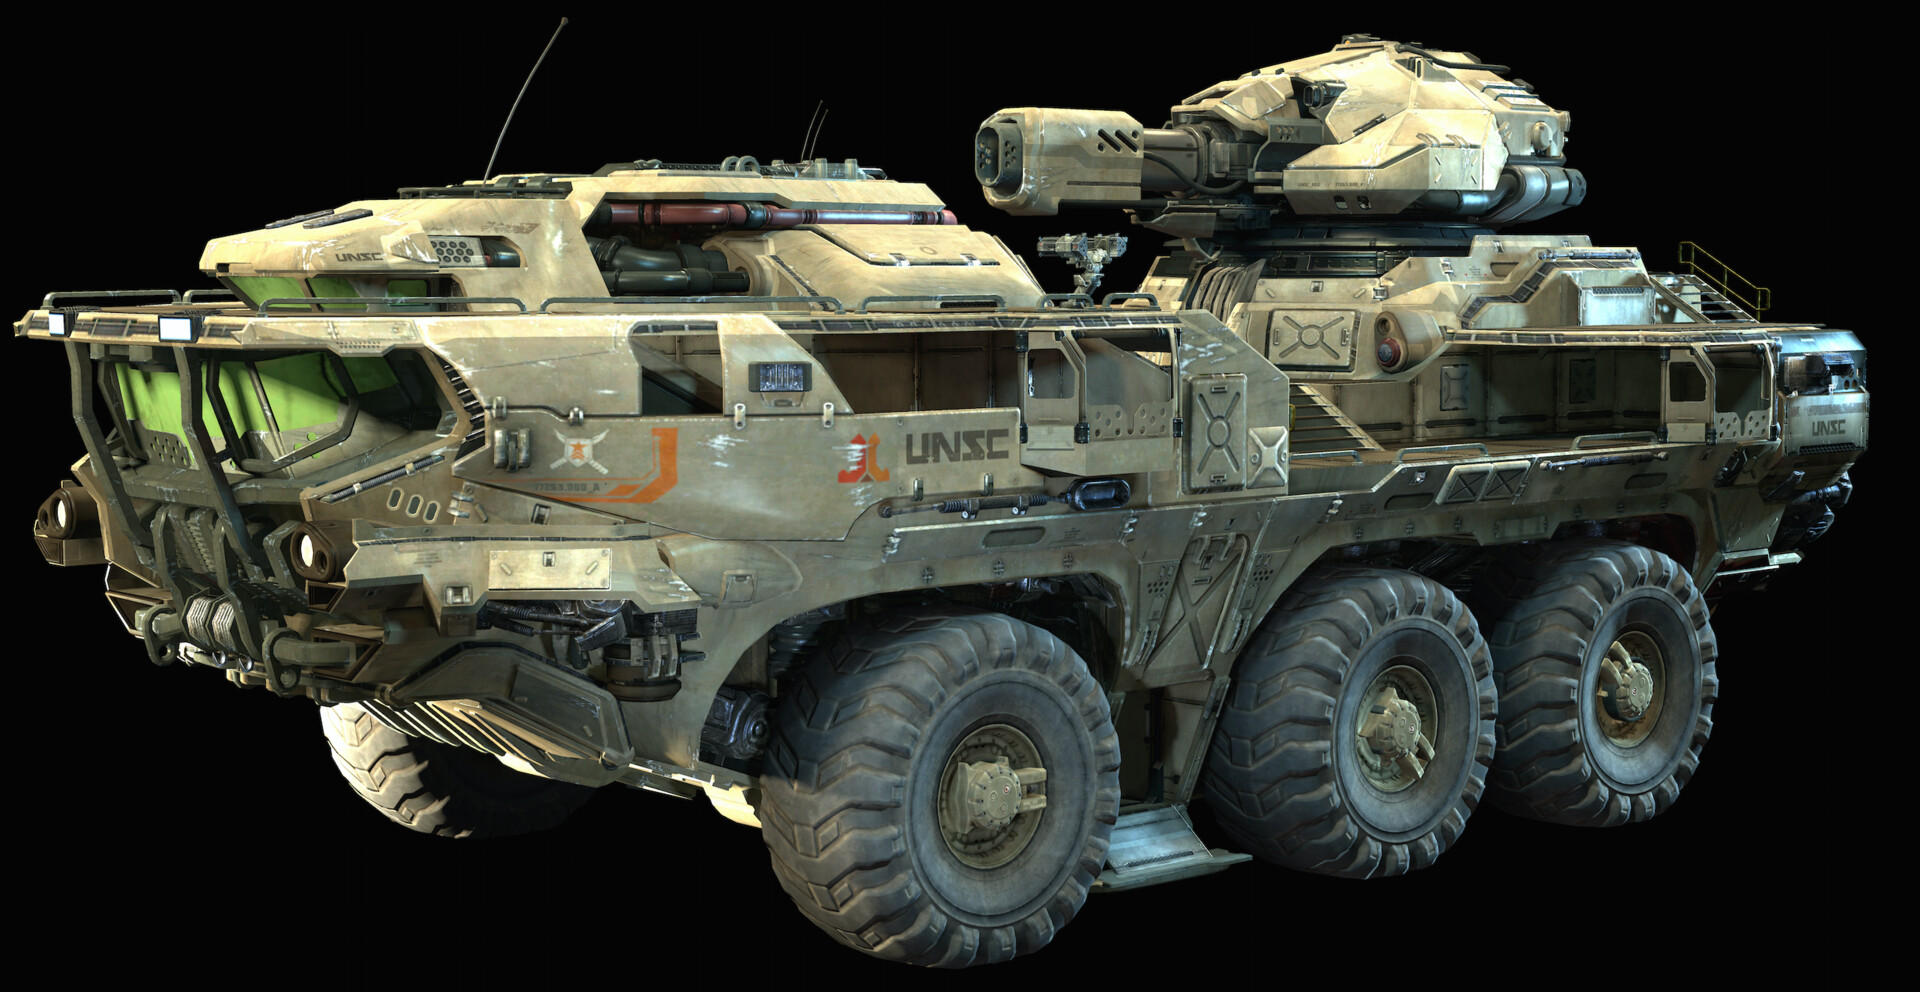 Halo 4 Unsc Vehicles